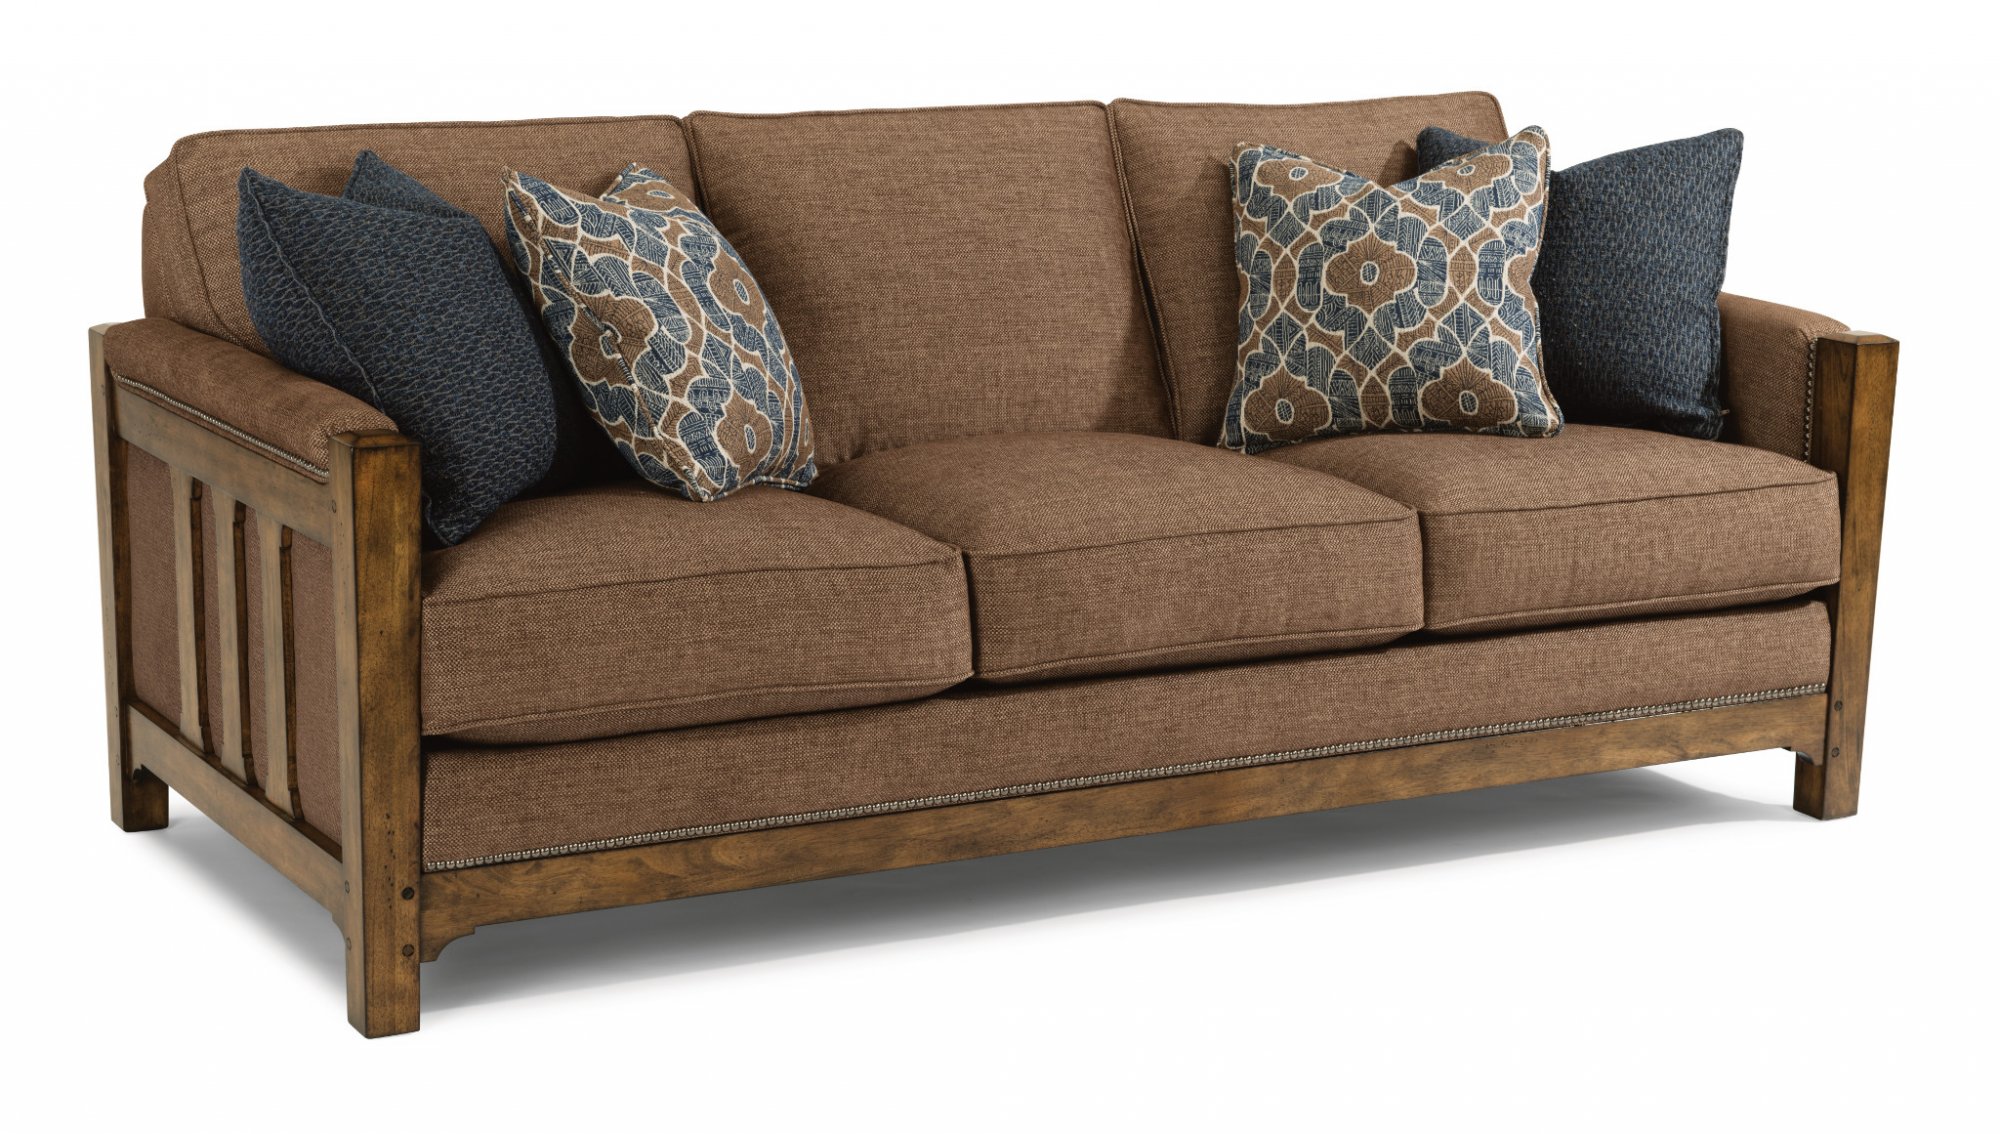 All about flexsteel sofa